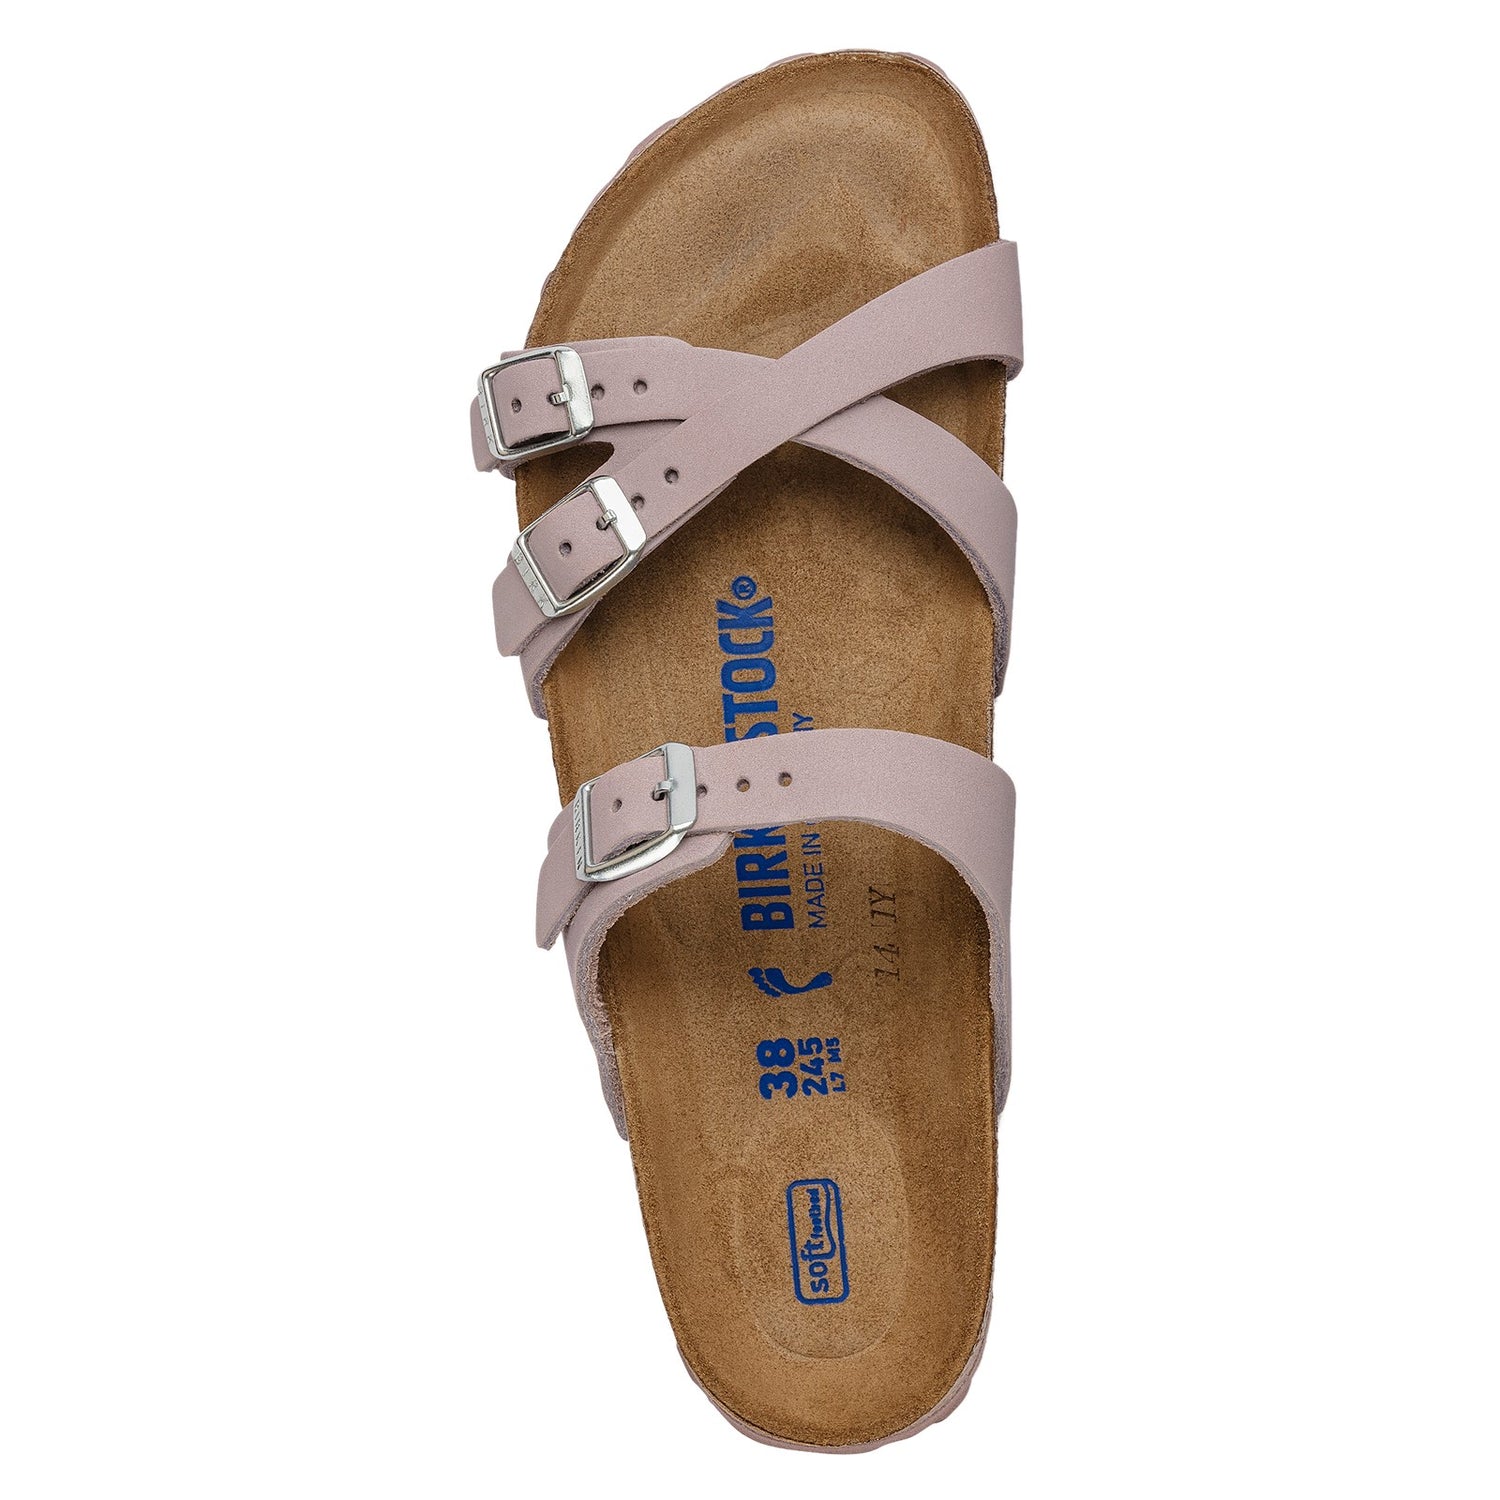 Peltz Shoes  Women's Birkenstock Franca Soft Footbed Sandal - Regular Width LILAC NUBUCK 1023 380 R